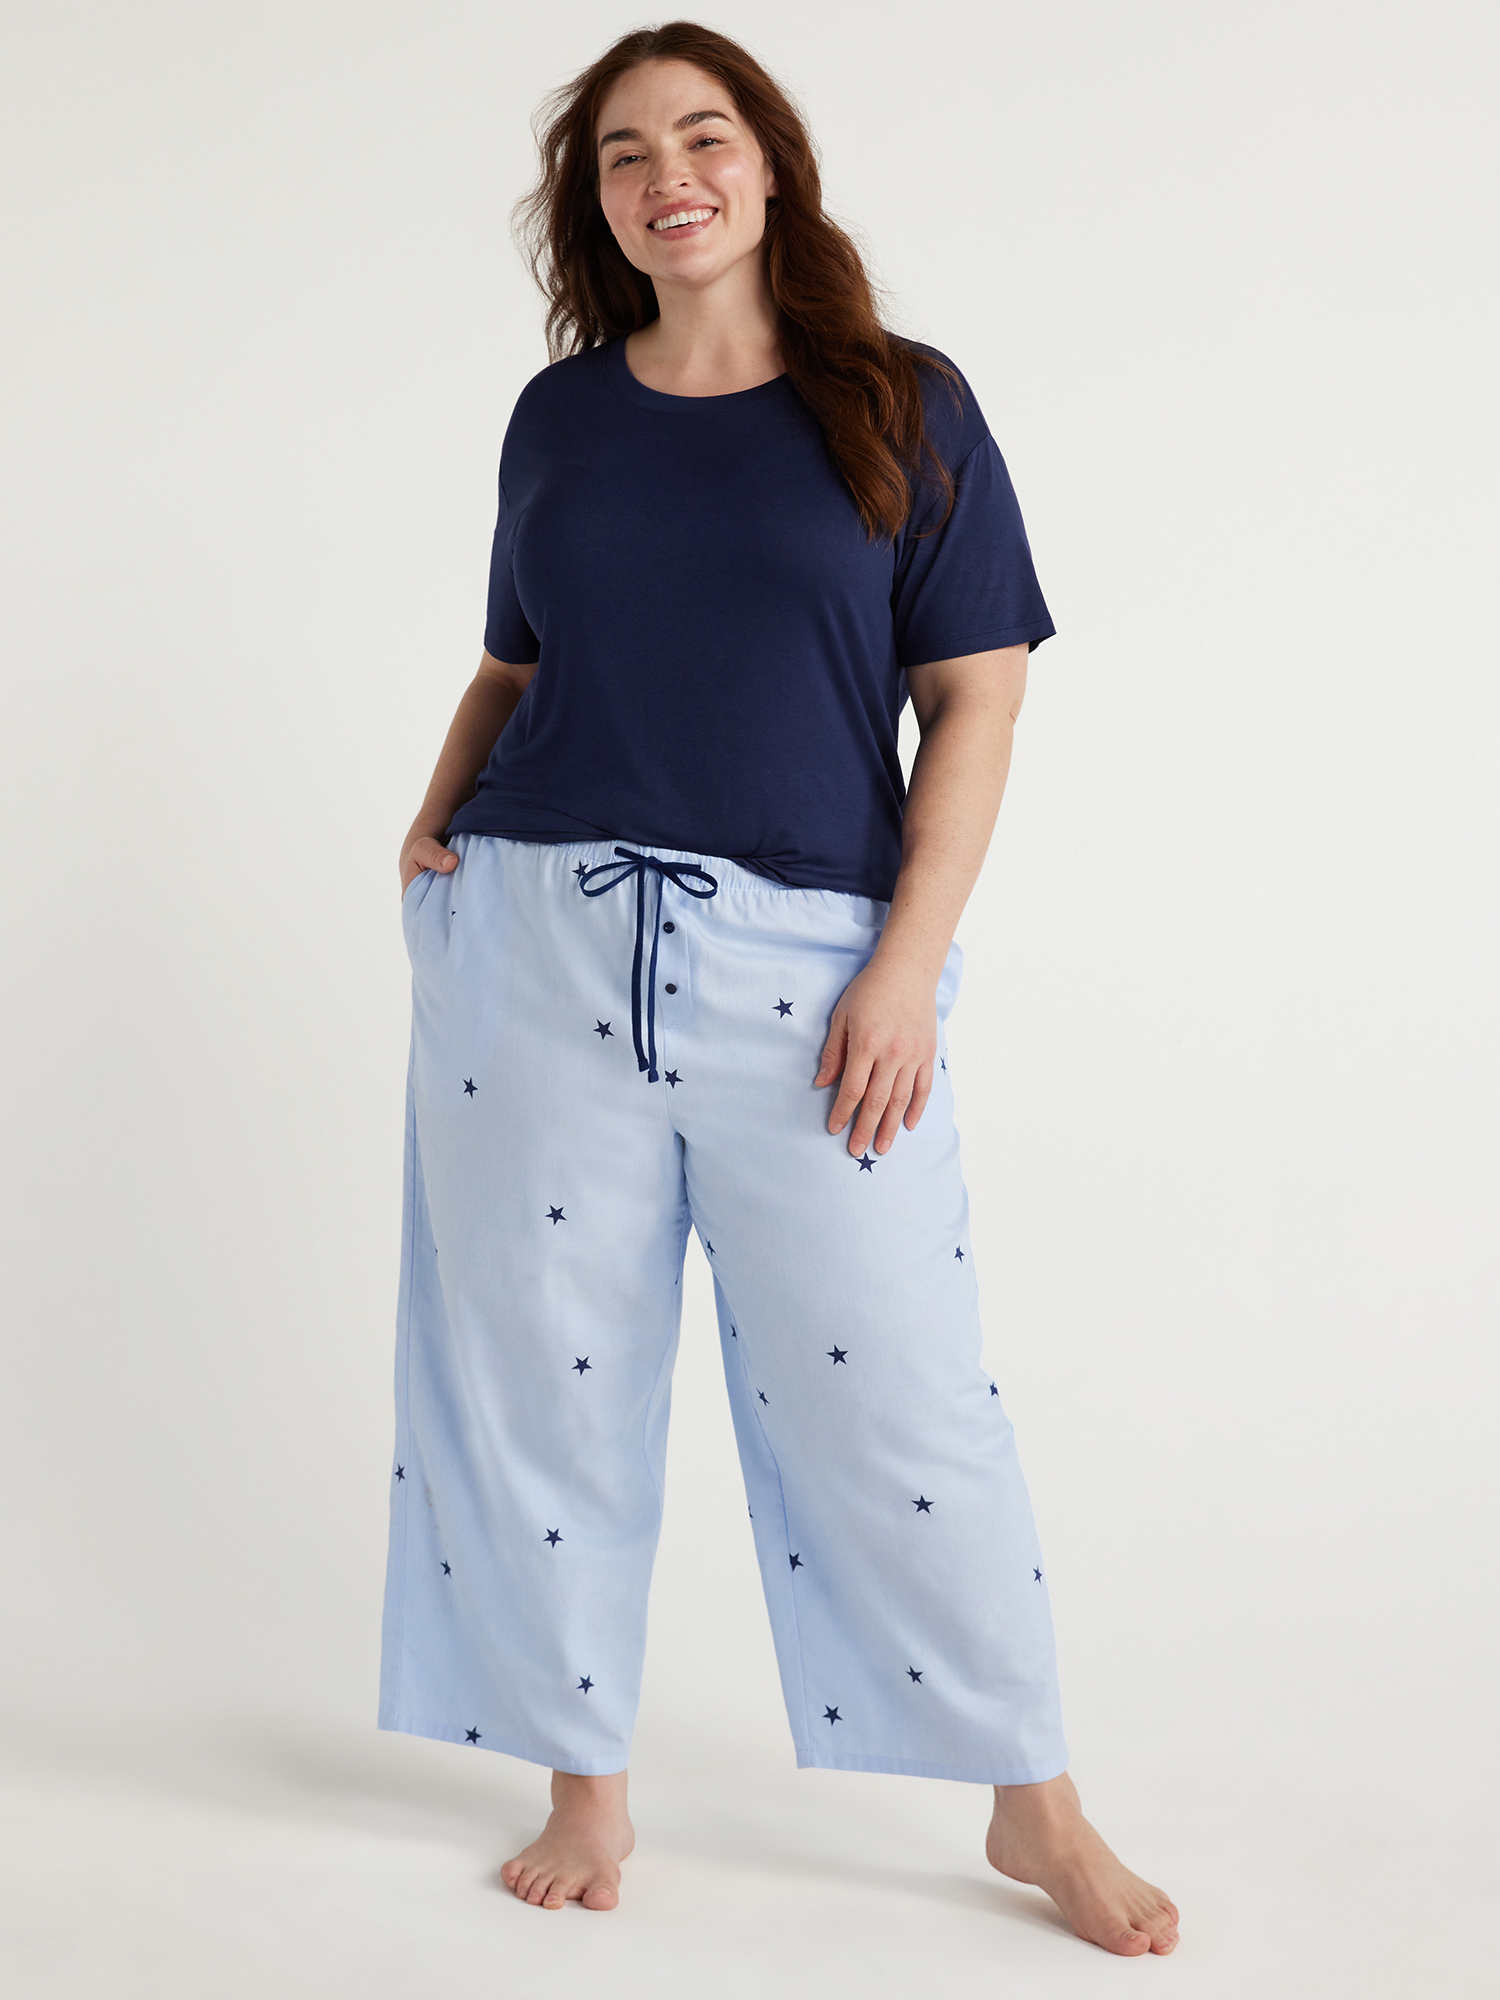 Joyspun Women's Short Sleeve Knit Sleep T-Shirt, Sizes S to 3X - image 4 of 7